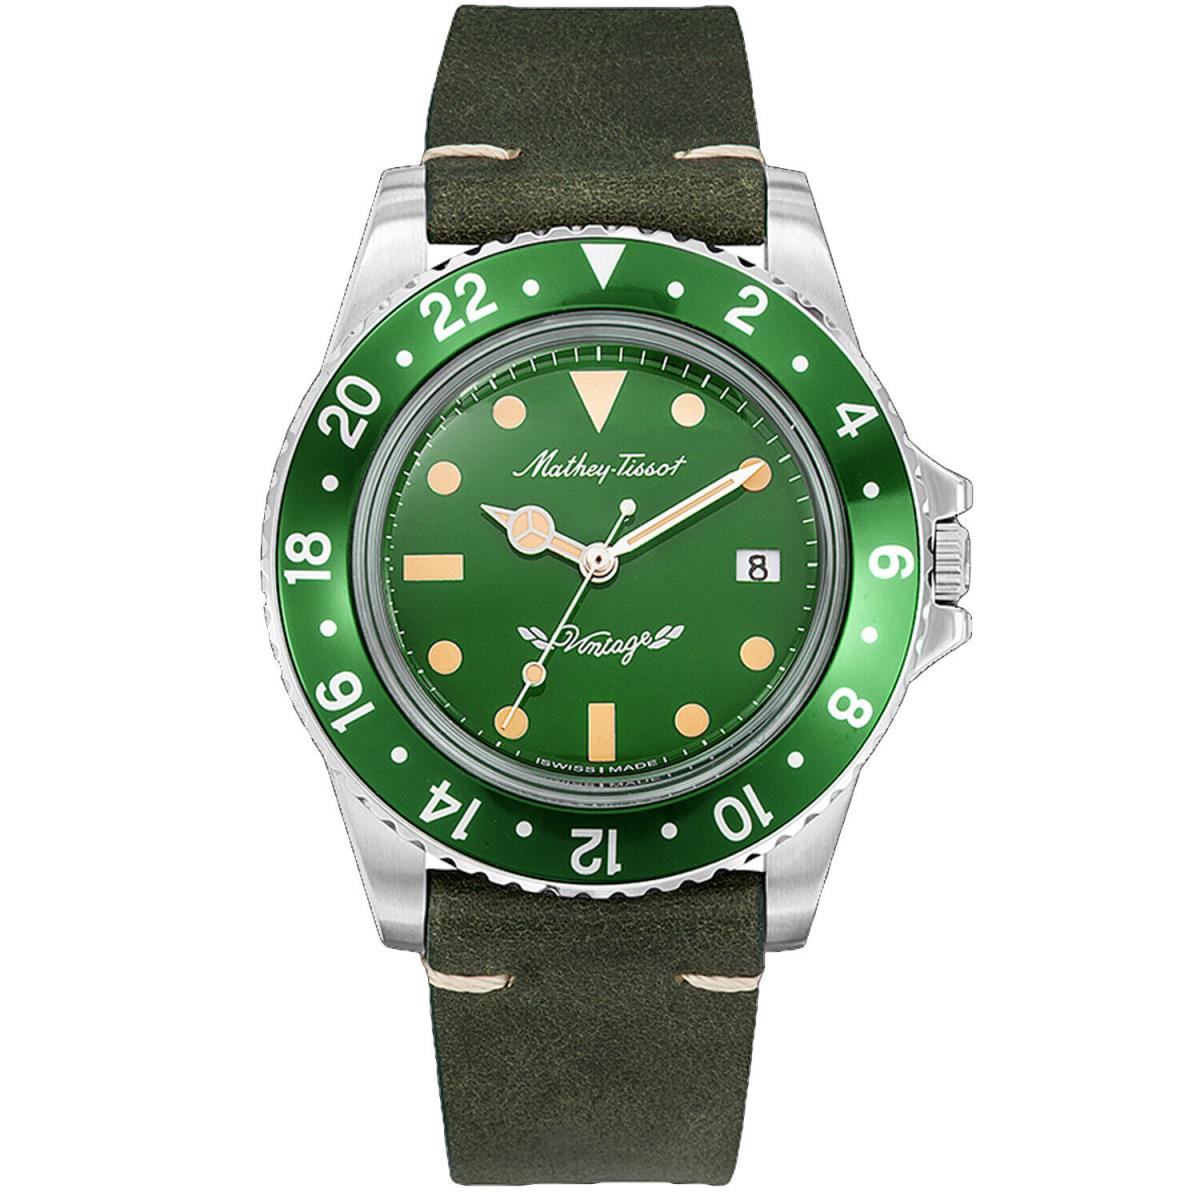 Mathey Tissot Men`s Vintage Green Dial Watch - H900ALV